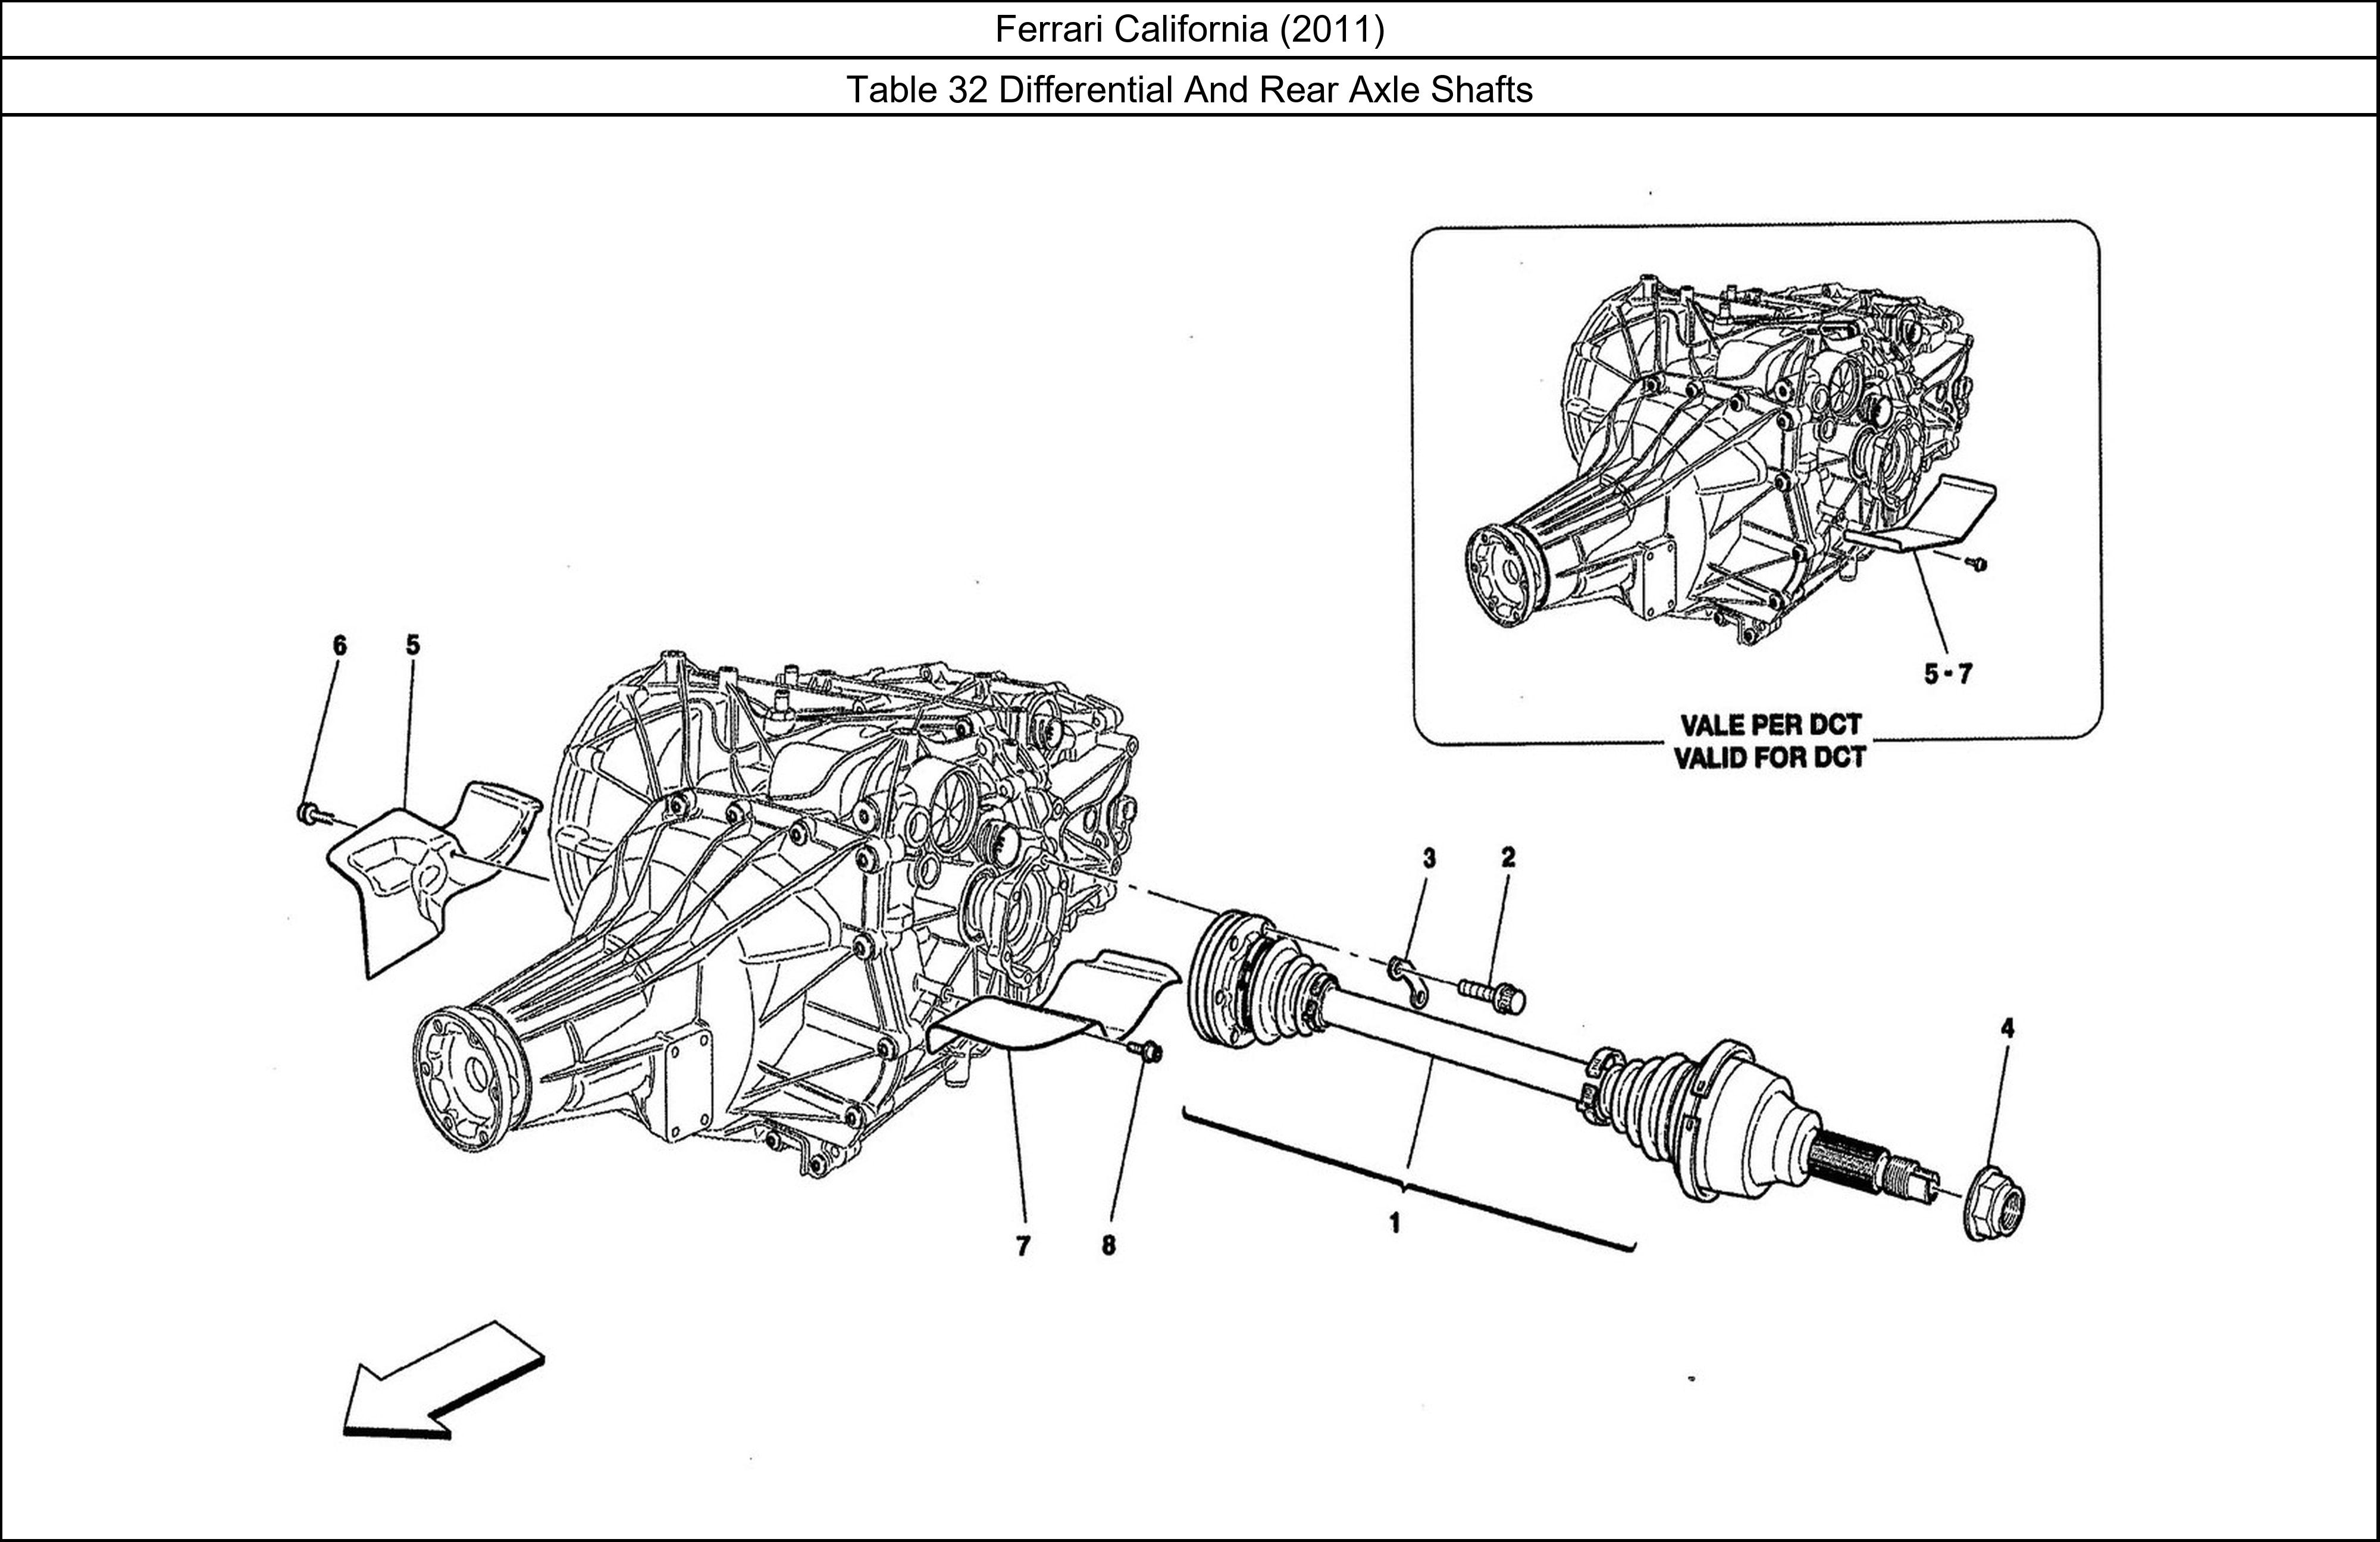 Ferrari Parts Ferrari California (2011) Table 32 Differential And Rear Axle Shafts